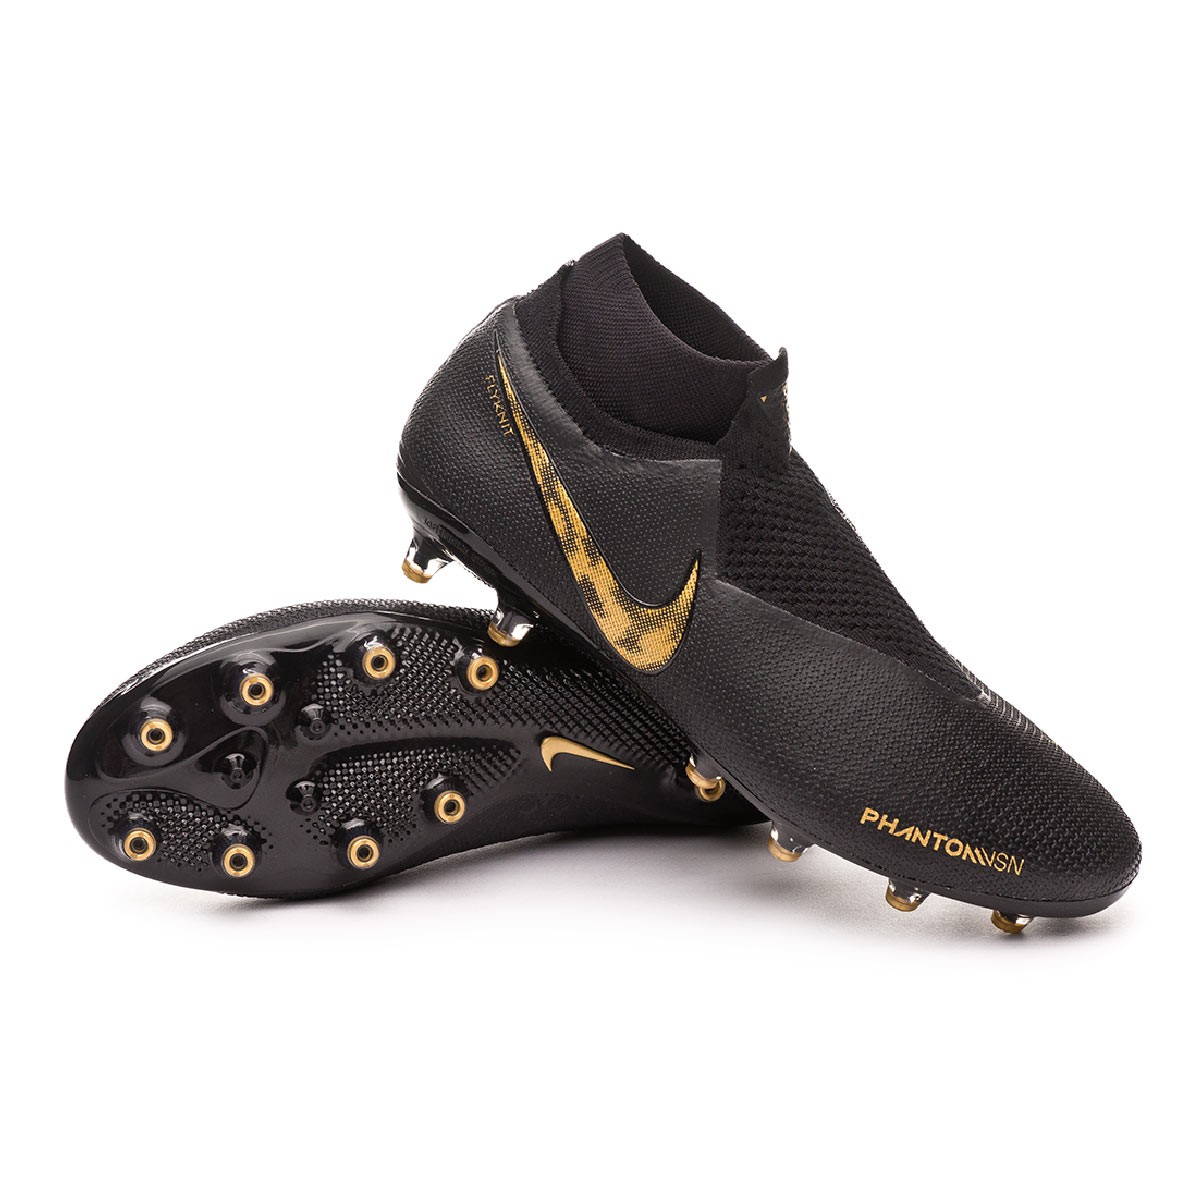 Football Boots Nike Phantom Vision Elite Df Ag Pro Black Metallic Vivid Gold Futbol Emotion